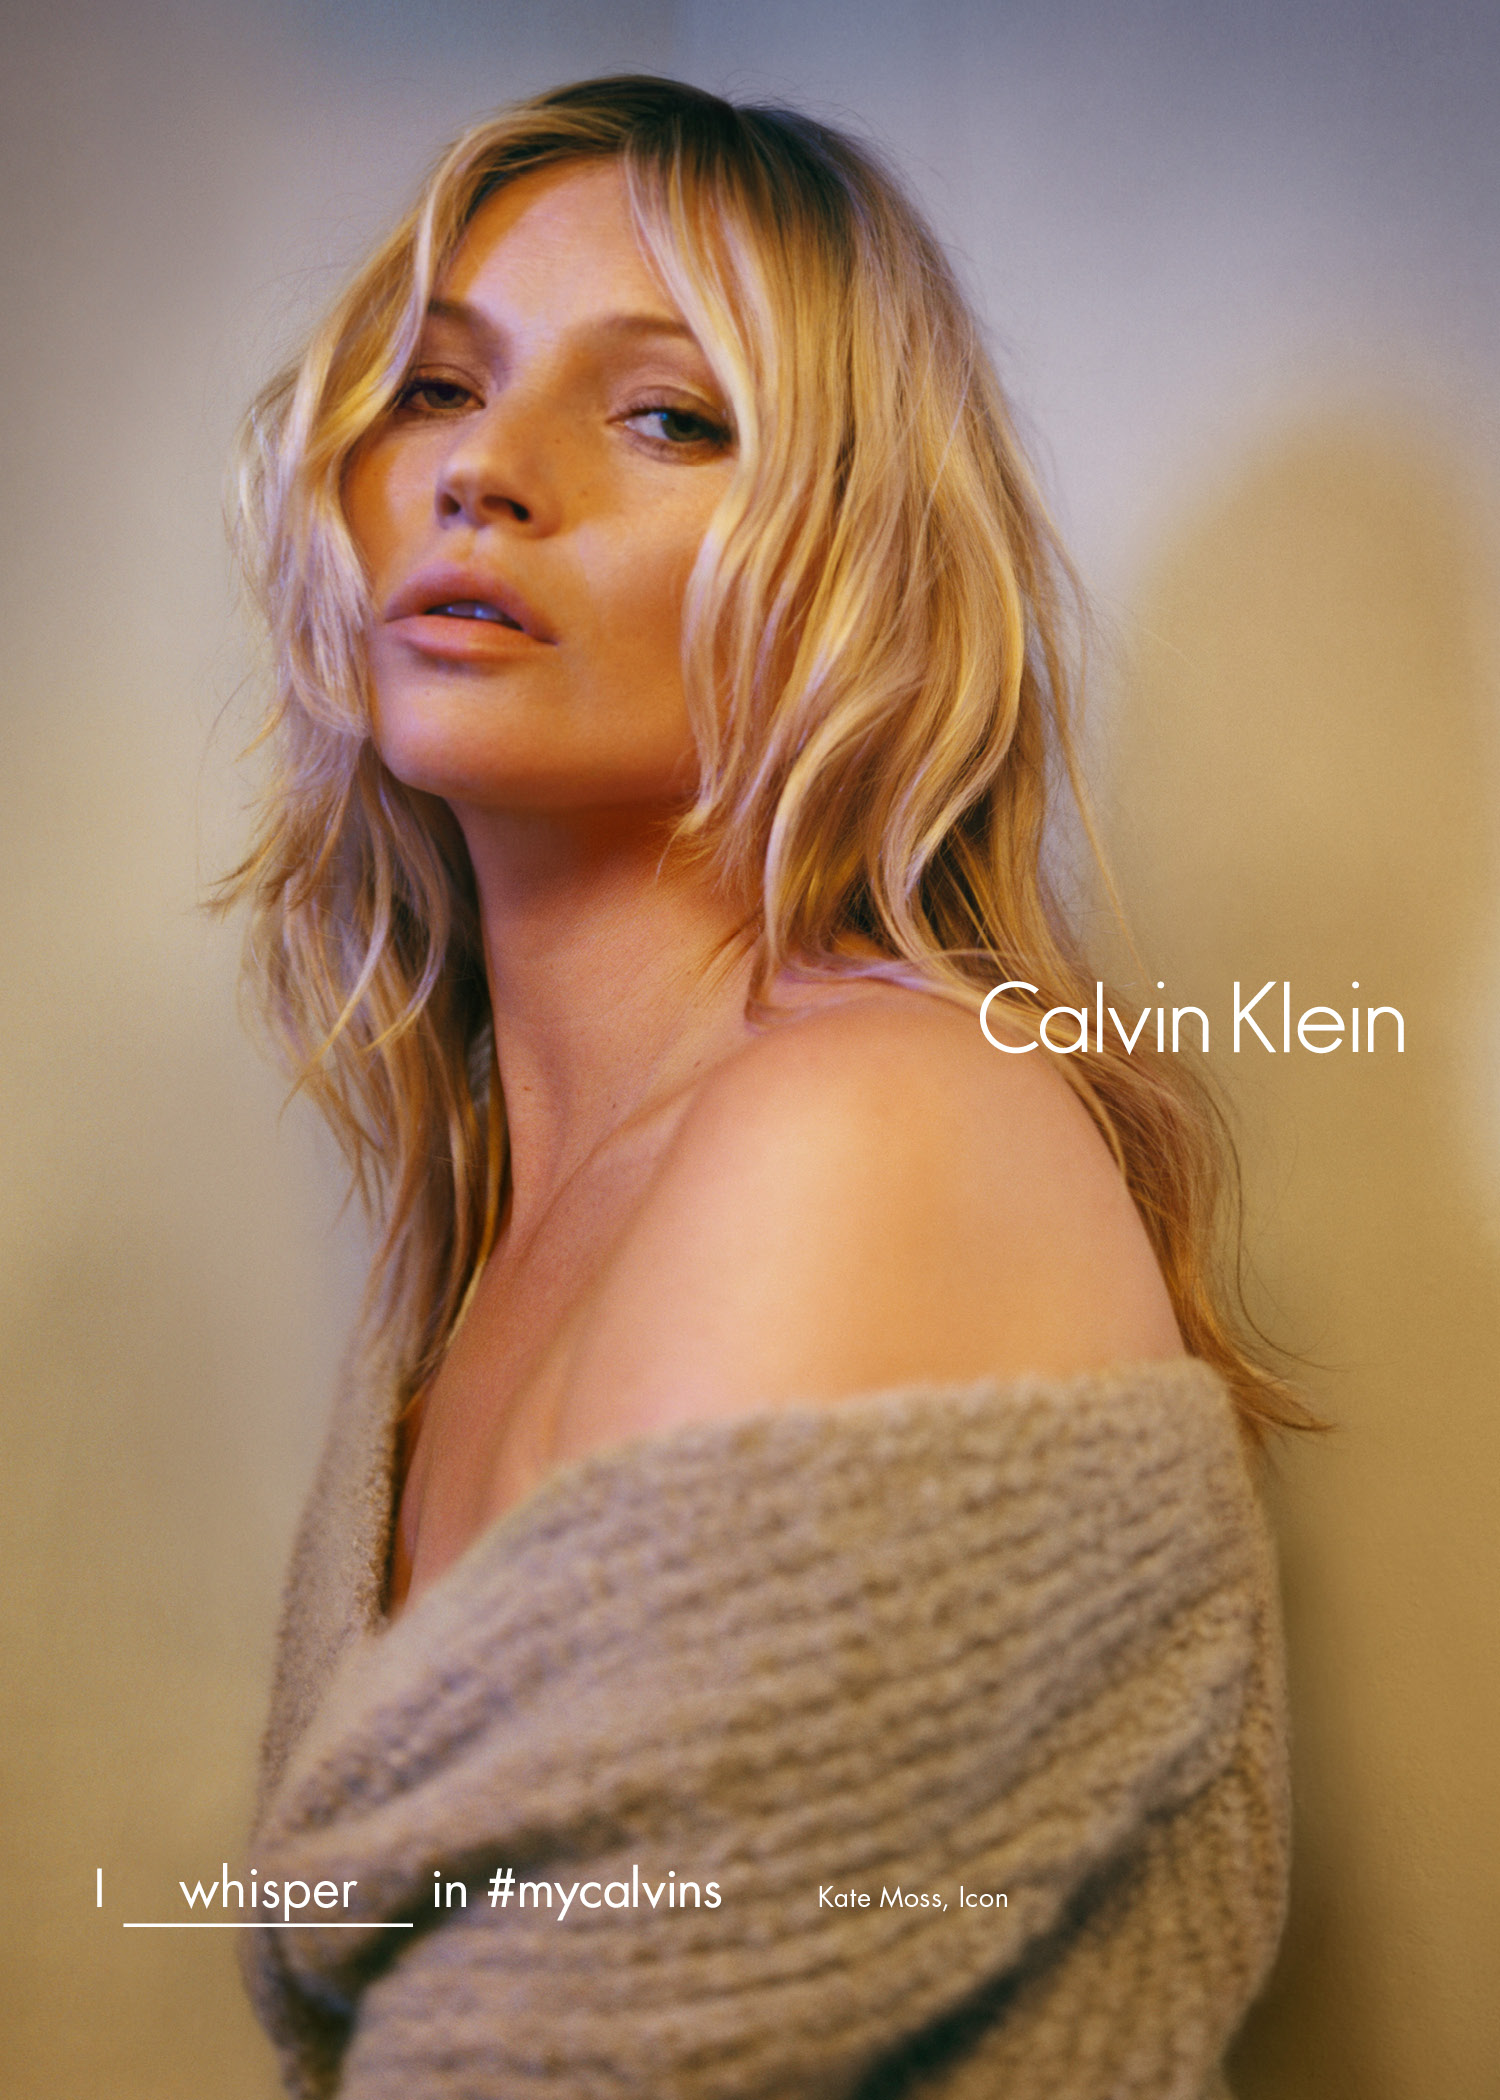 Calvin Klein campagna pubblicitaria autunno inverno 2016 2017: testimonial Kate Moss, Bella Hadid e Cameron Dallas